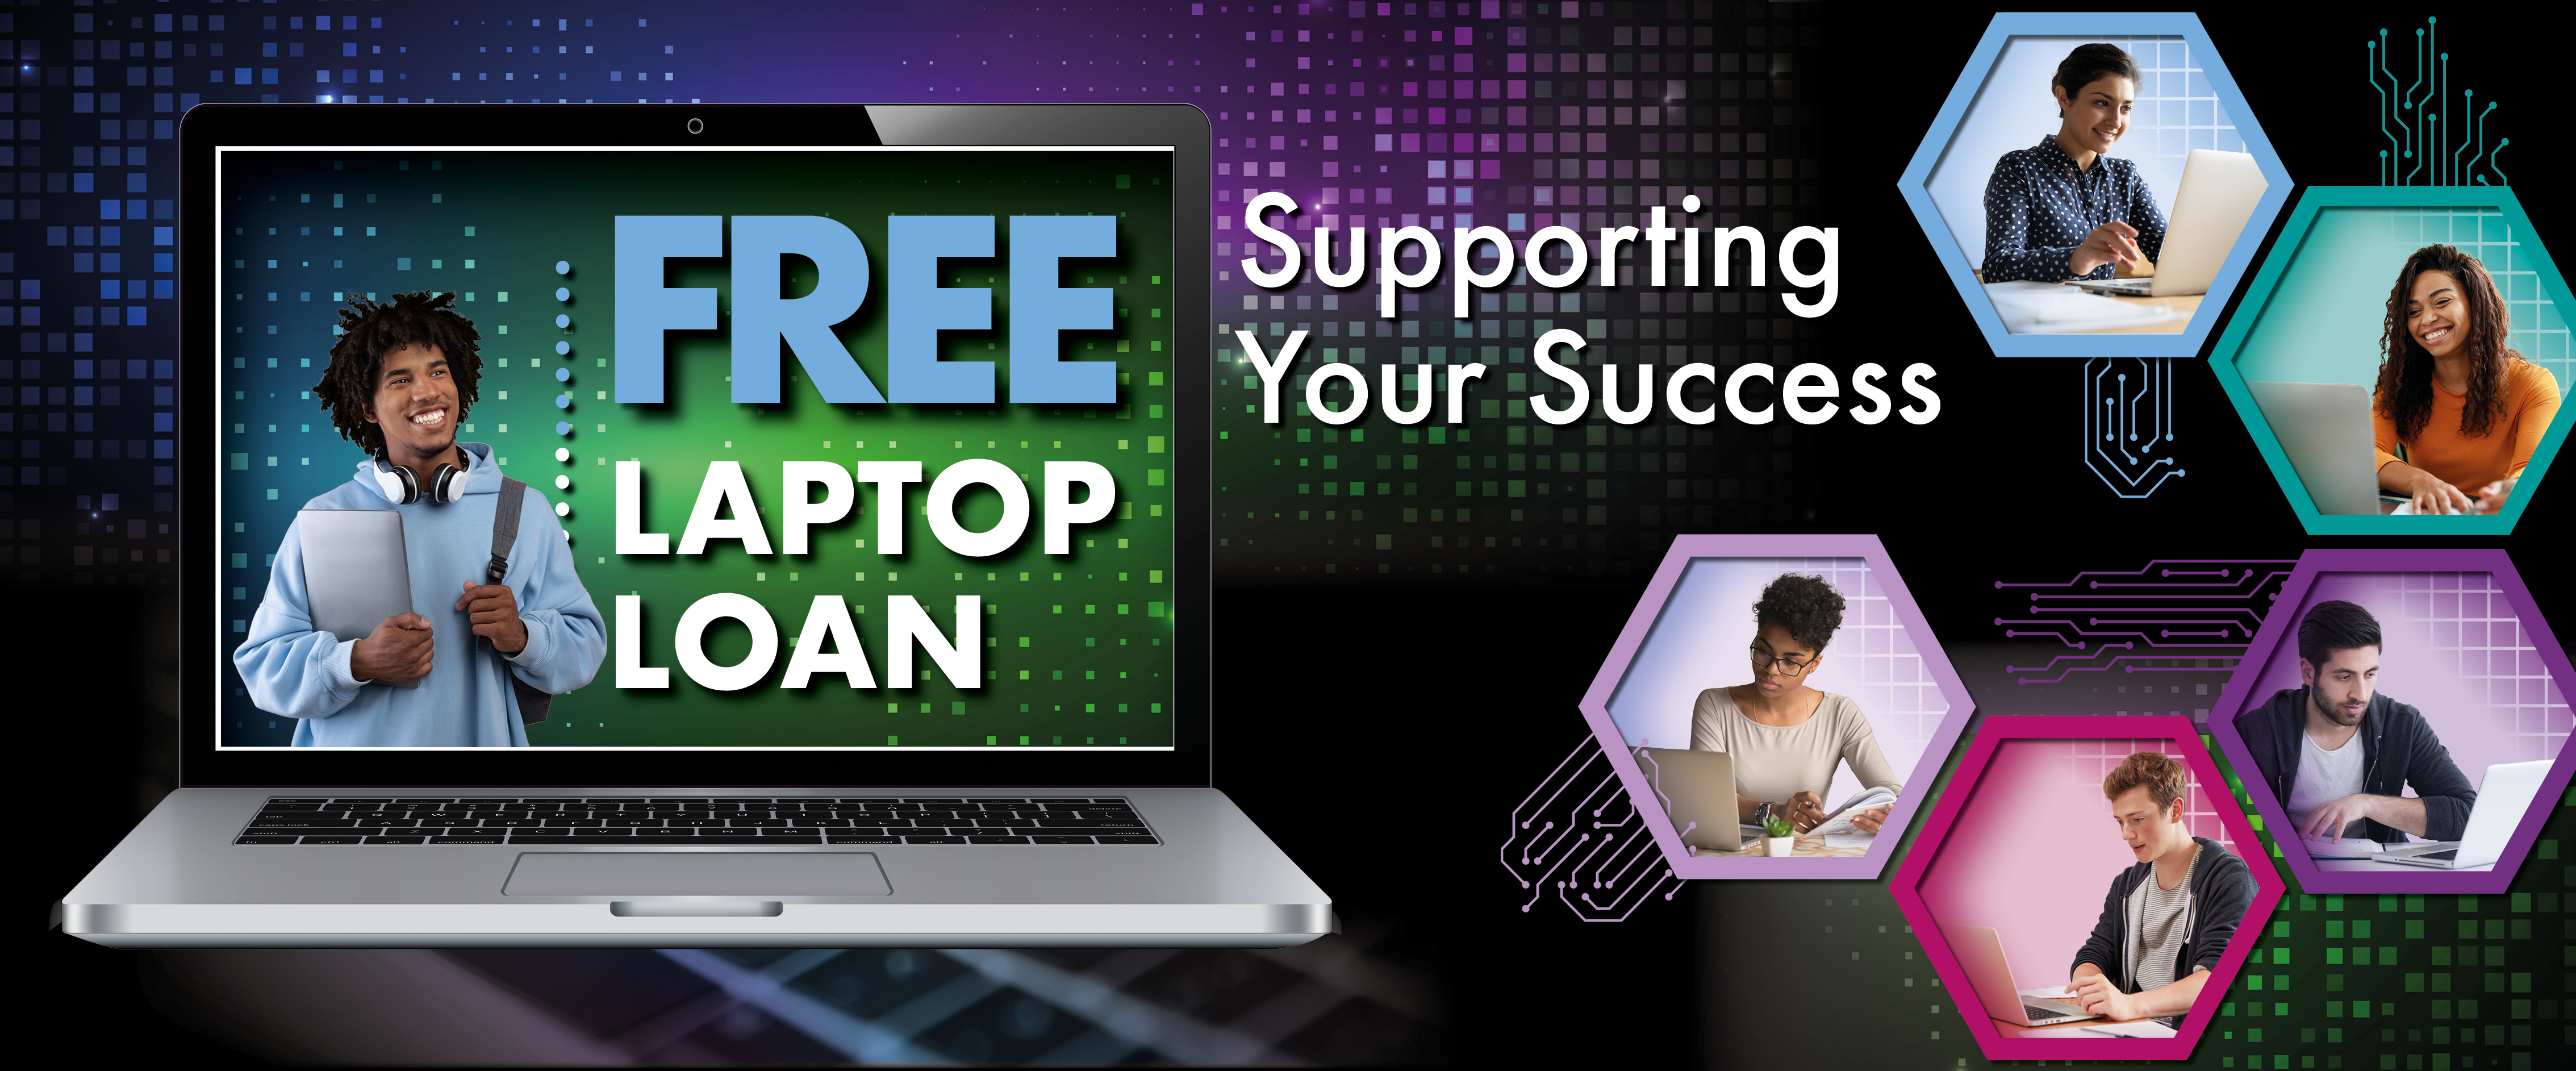 Free Laptop Loan